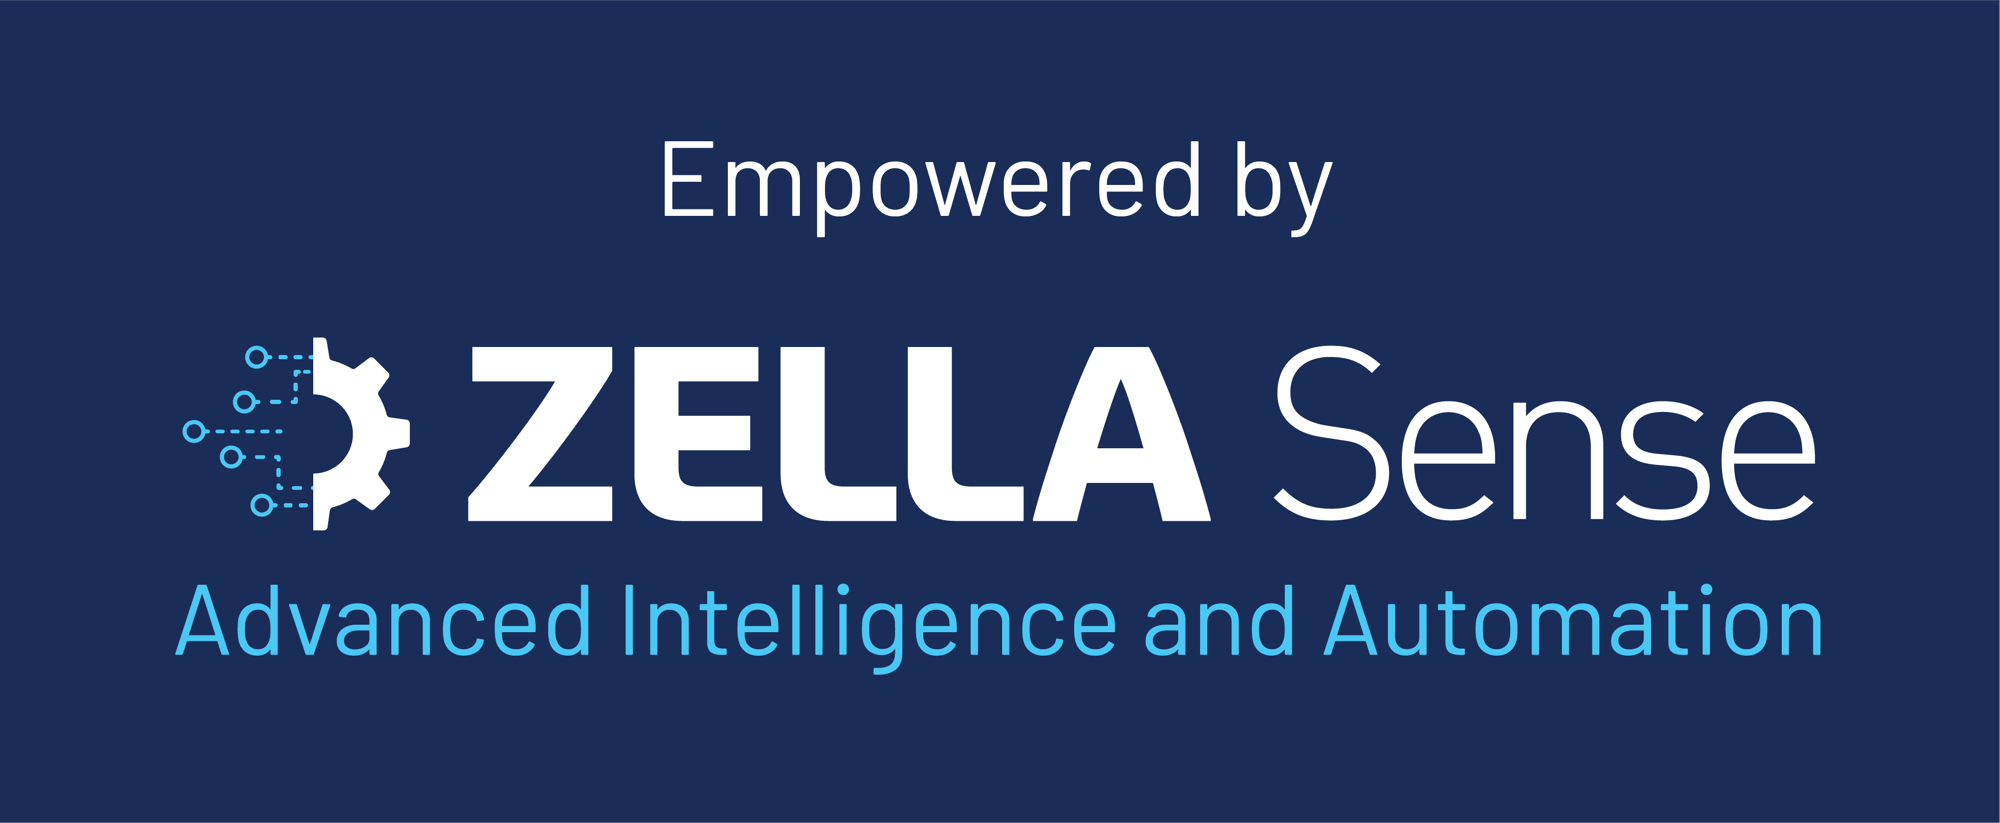 Empowered by Zella Sense_Empowered by Zella Sense Advanced Intelligence and Automation